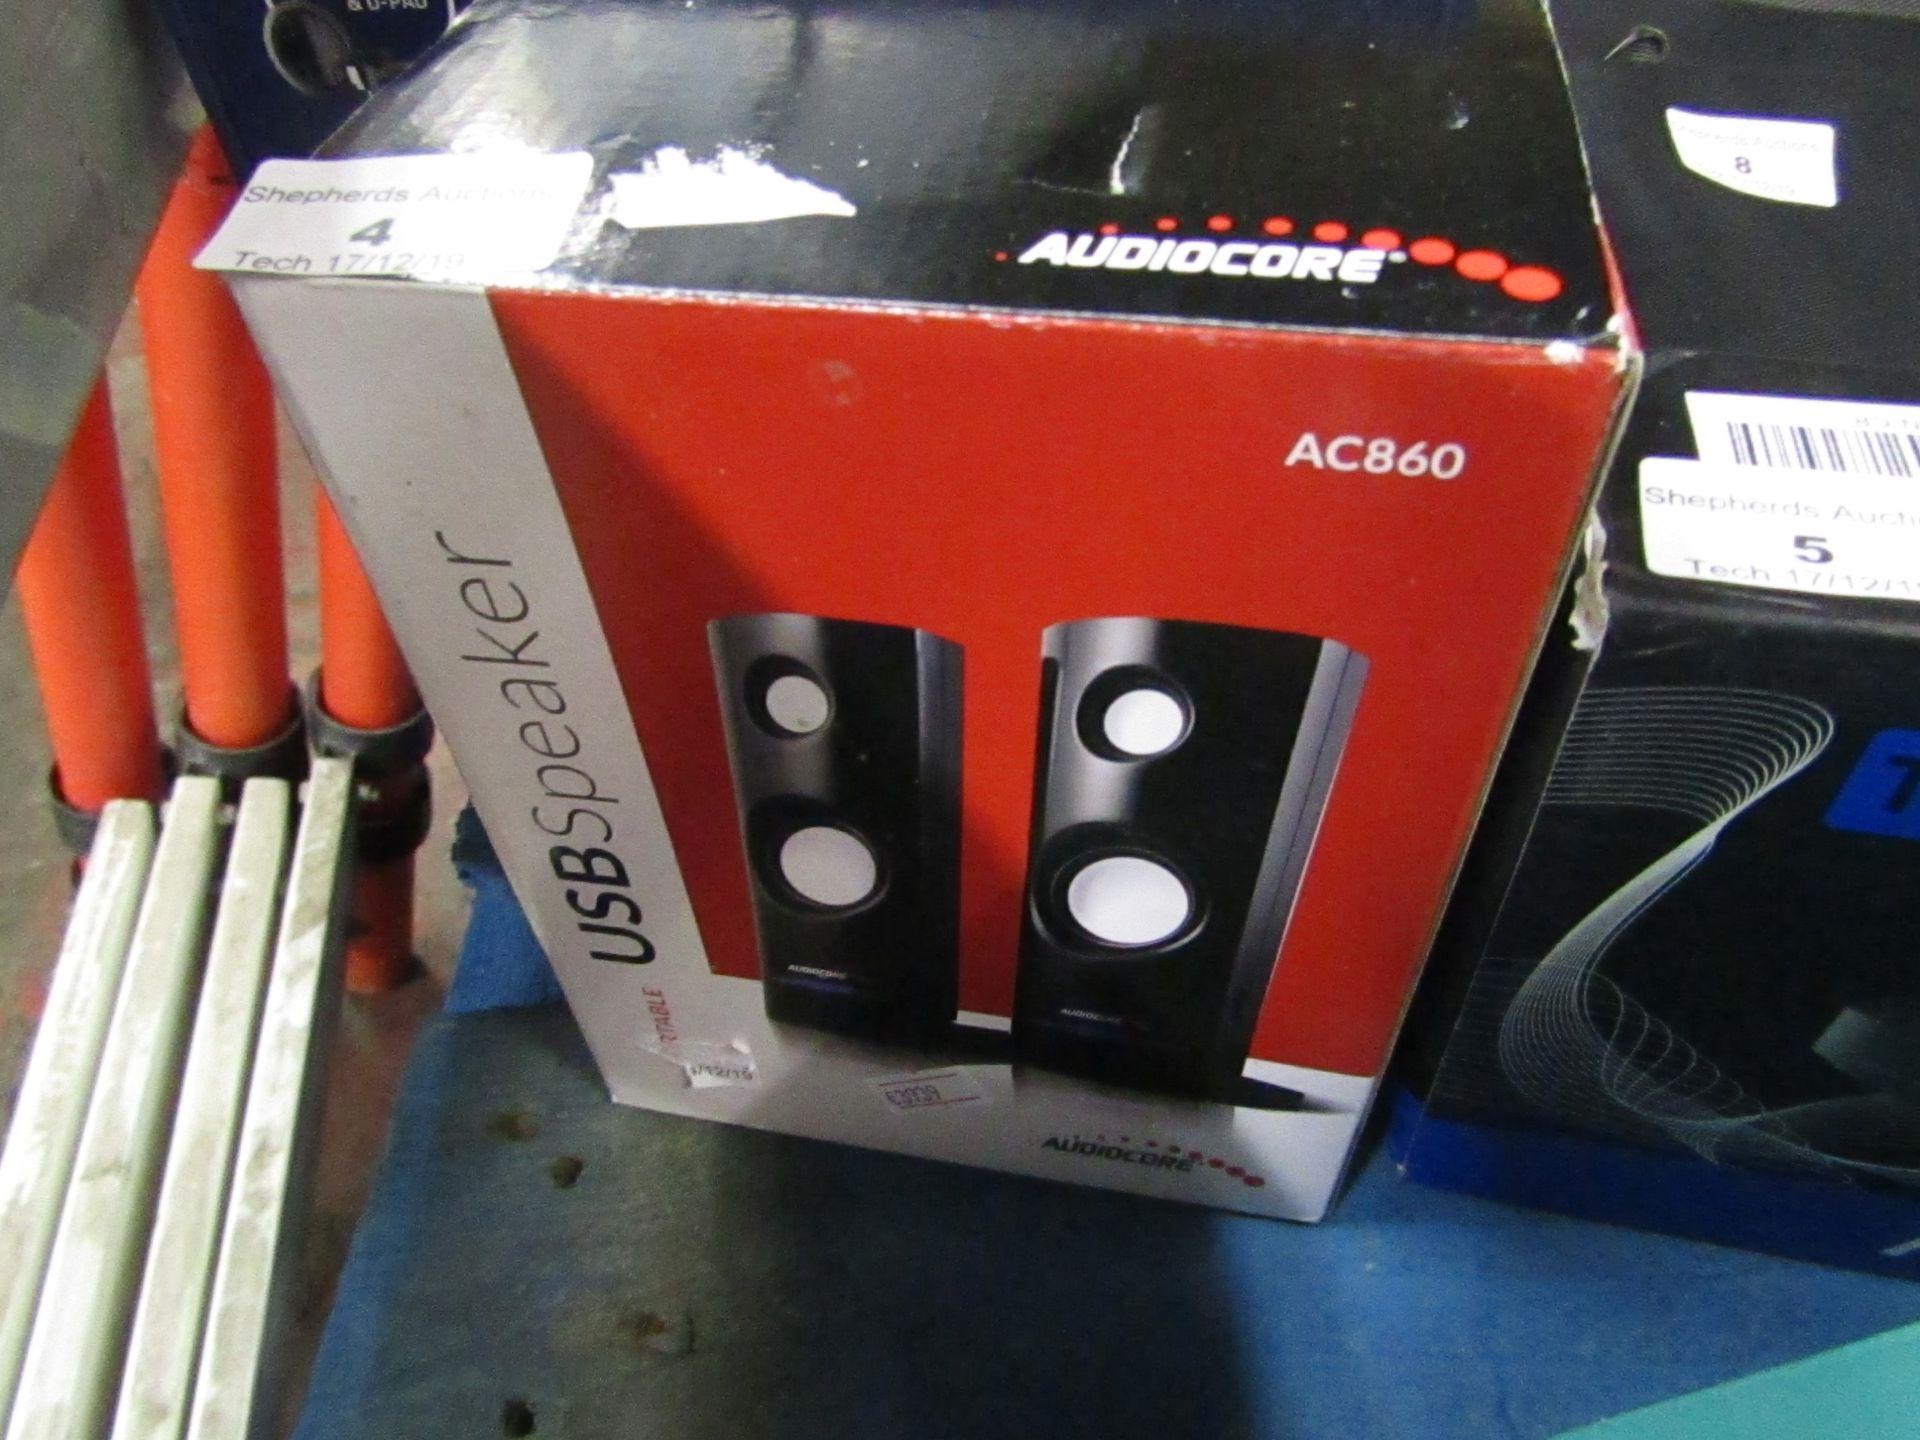 \Audio core AC860 Usb Speakers, unchecked